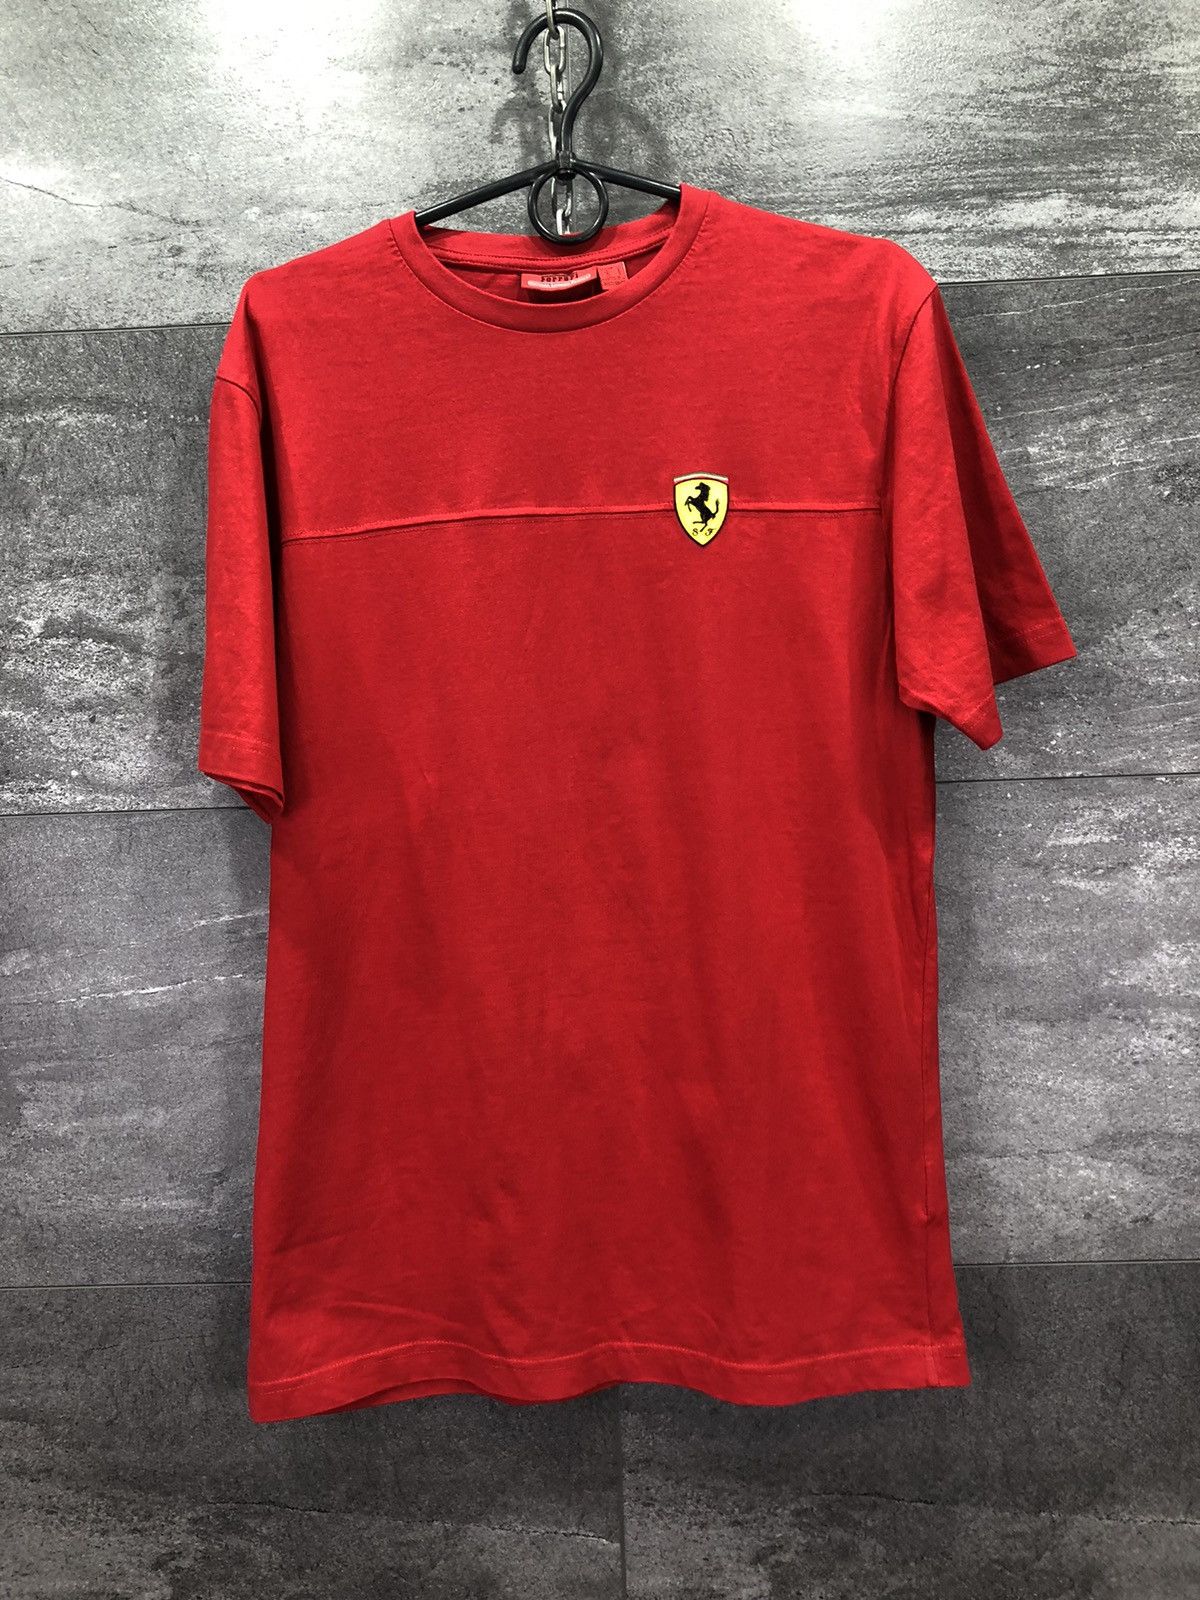 Pre-owned Ferrari X Formula Uno Vintage Ferrari Logo Red T-shirt Racing Ferrari Formula One